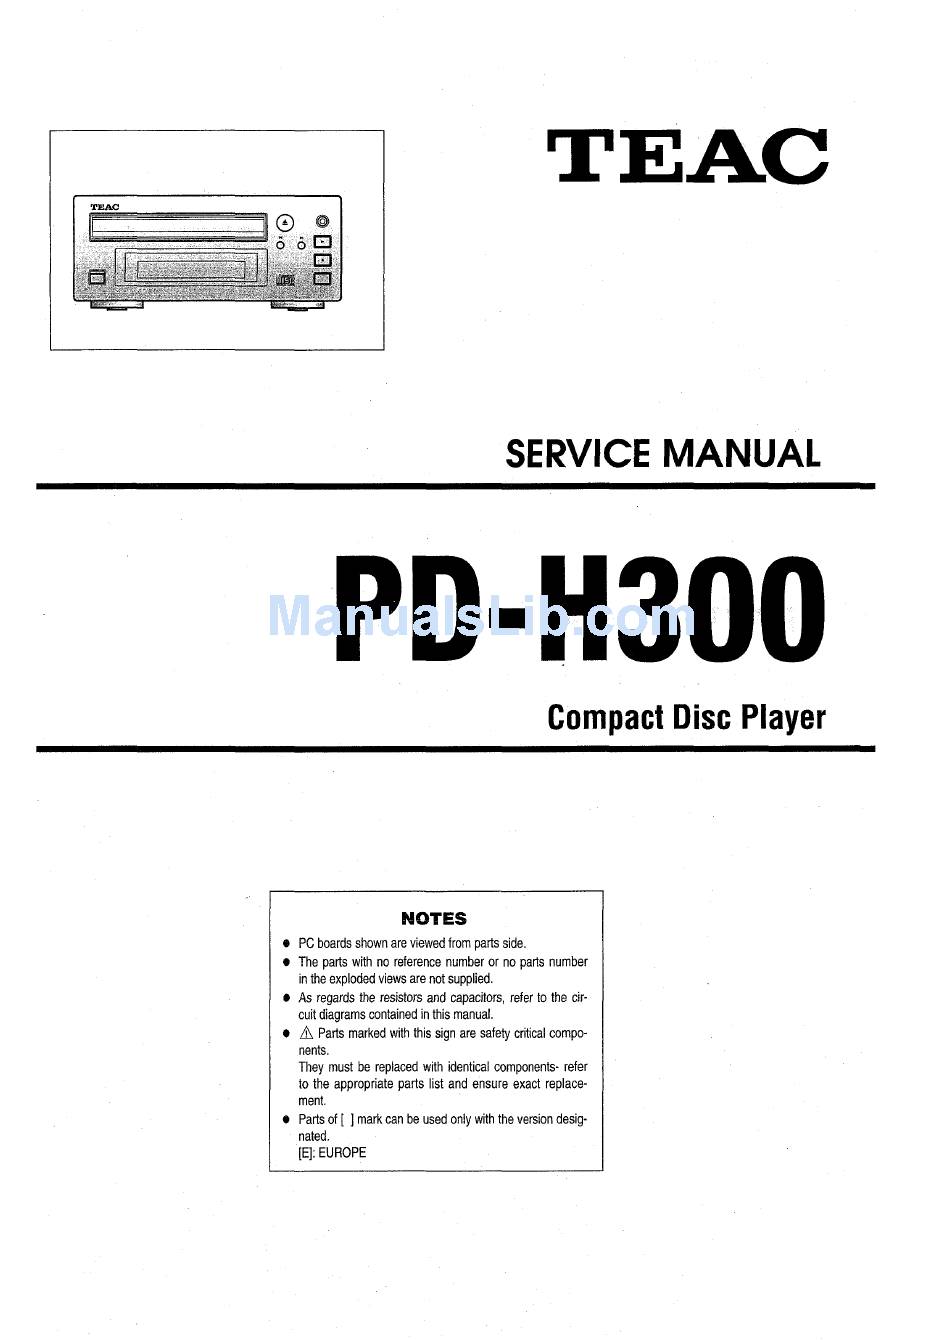 stata 13 manual pdf